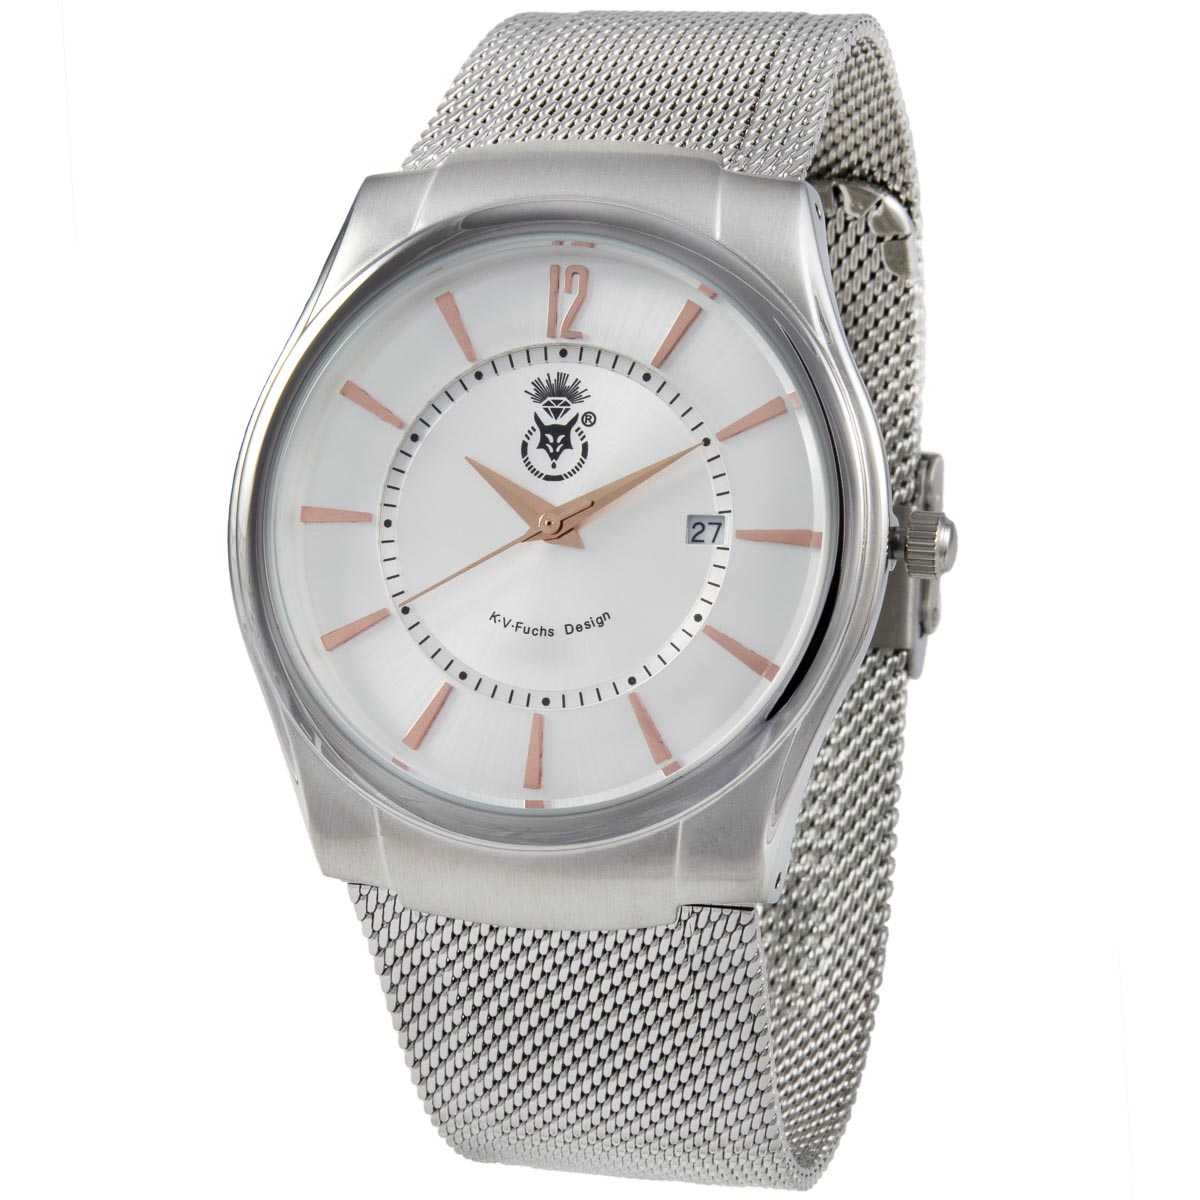 K.V. Fuchs Design Herren Quarzuhr analog Armbanduhr in silber mit Edelstahl Milanaise-Armband in silber »U-79-07-Silber«